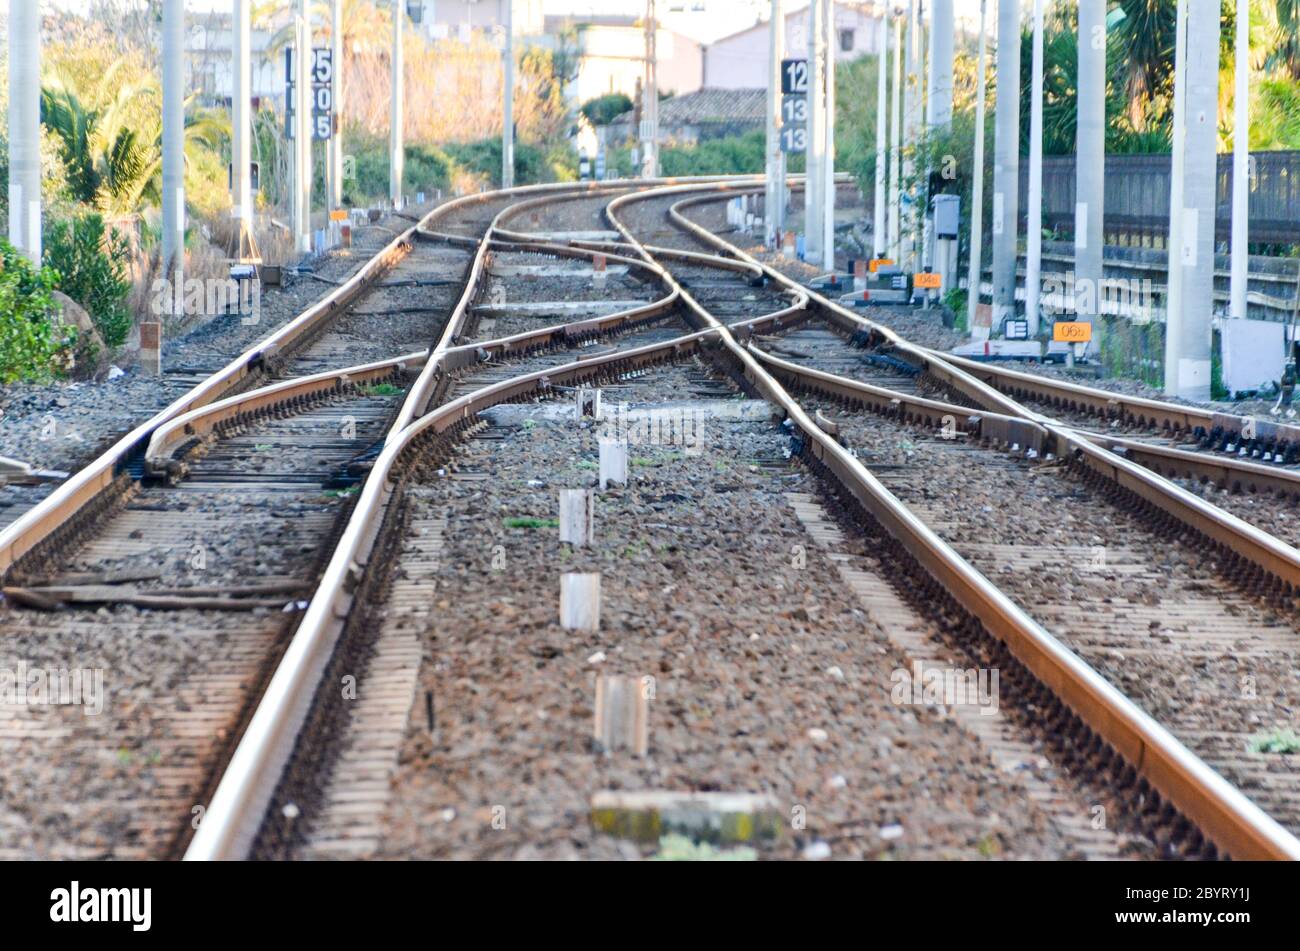 Railway lines of the Ferrovia Circumetnea, train line around the Mount Etna, Sicily, Italy Stock Photo